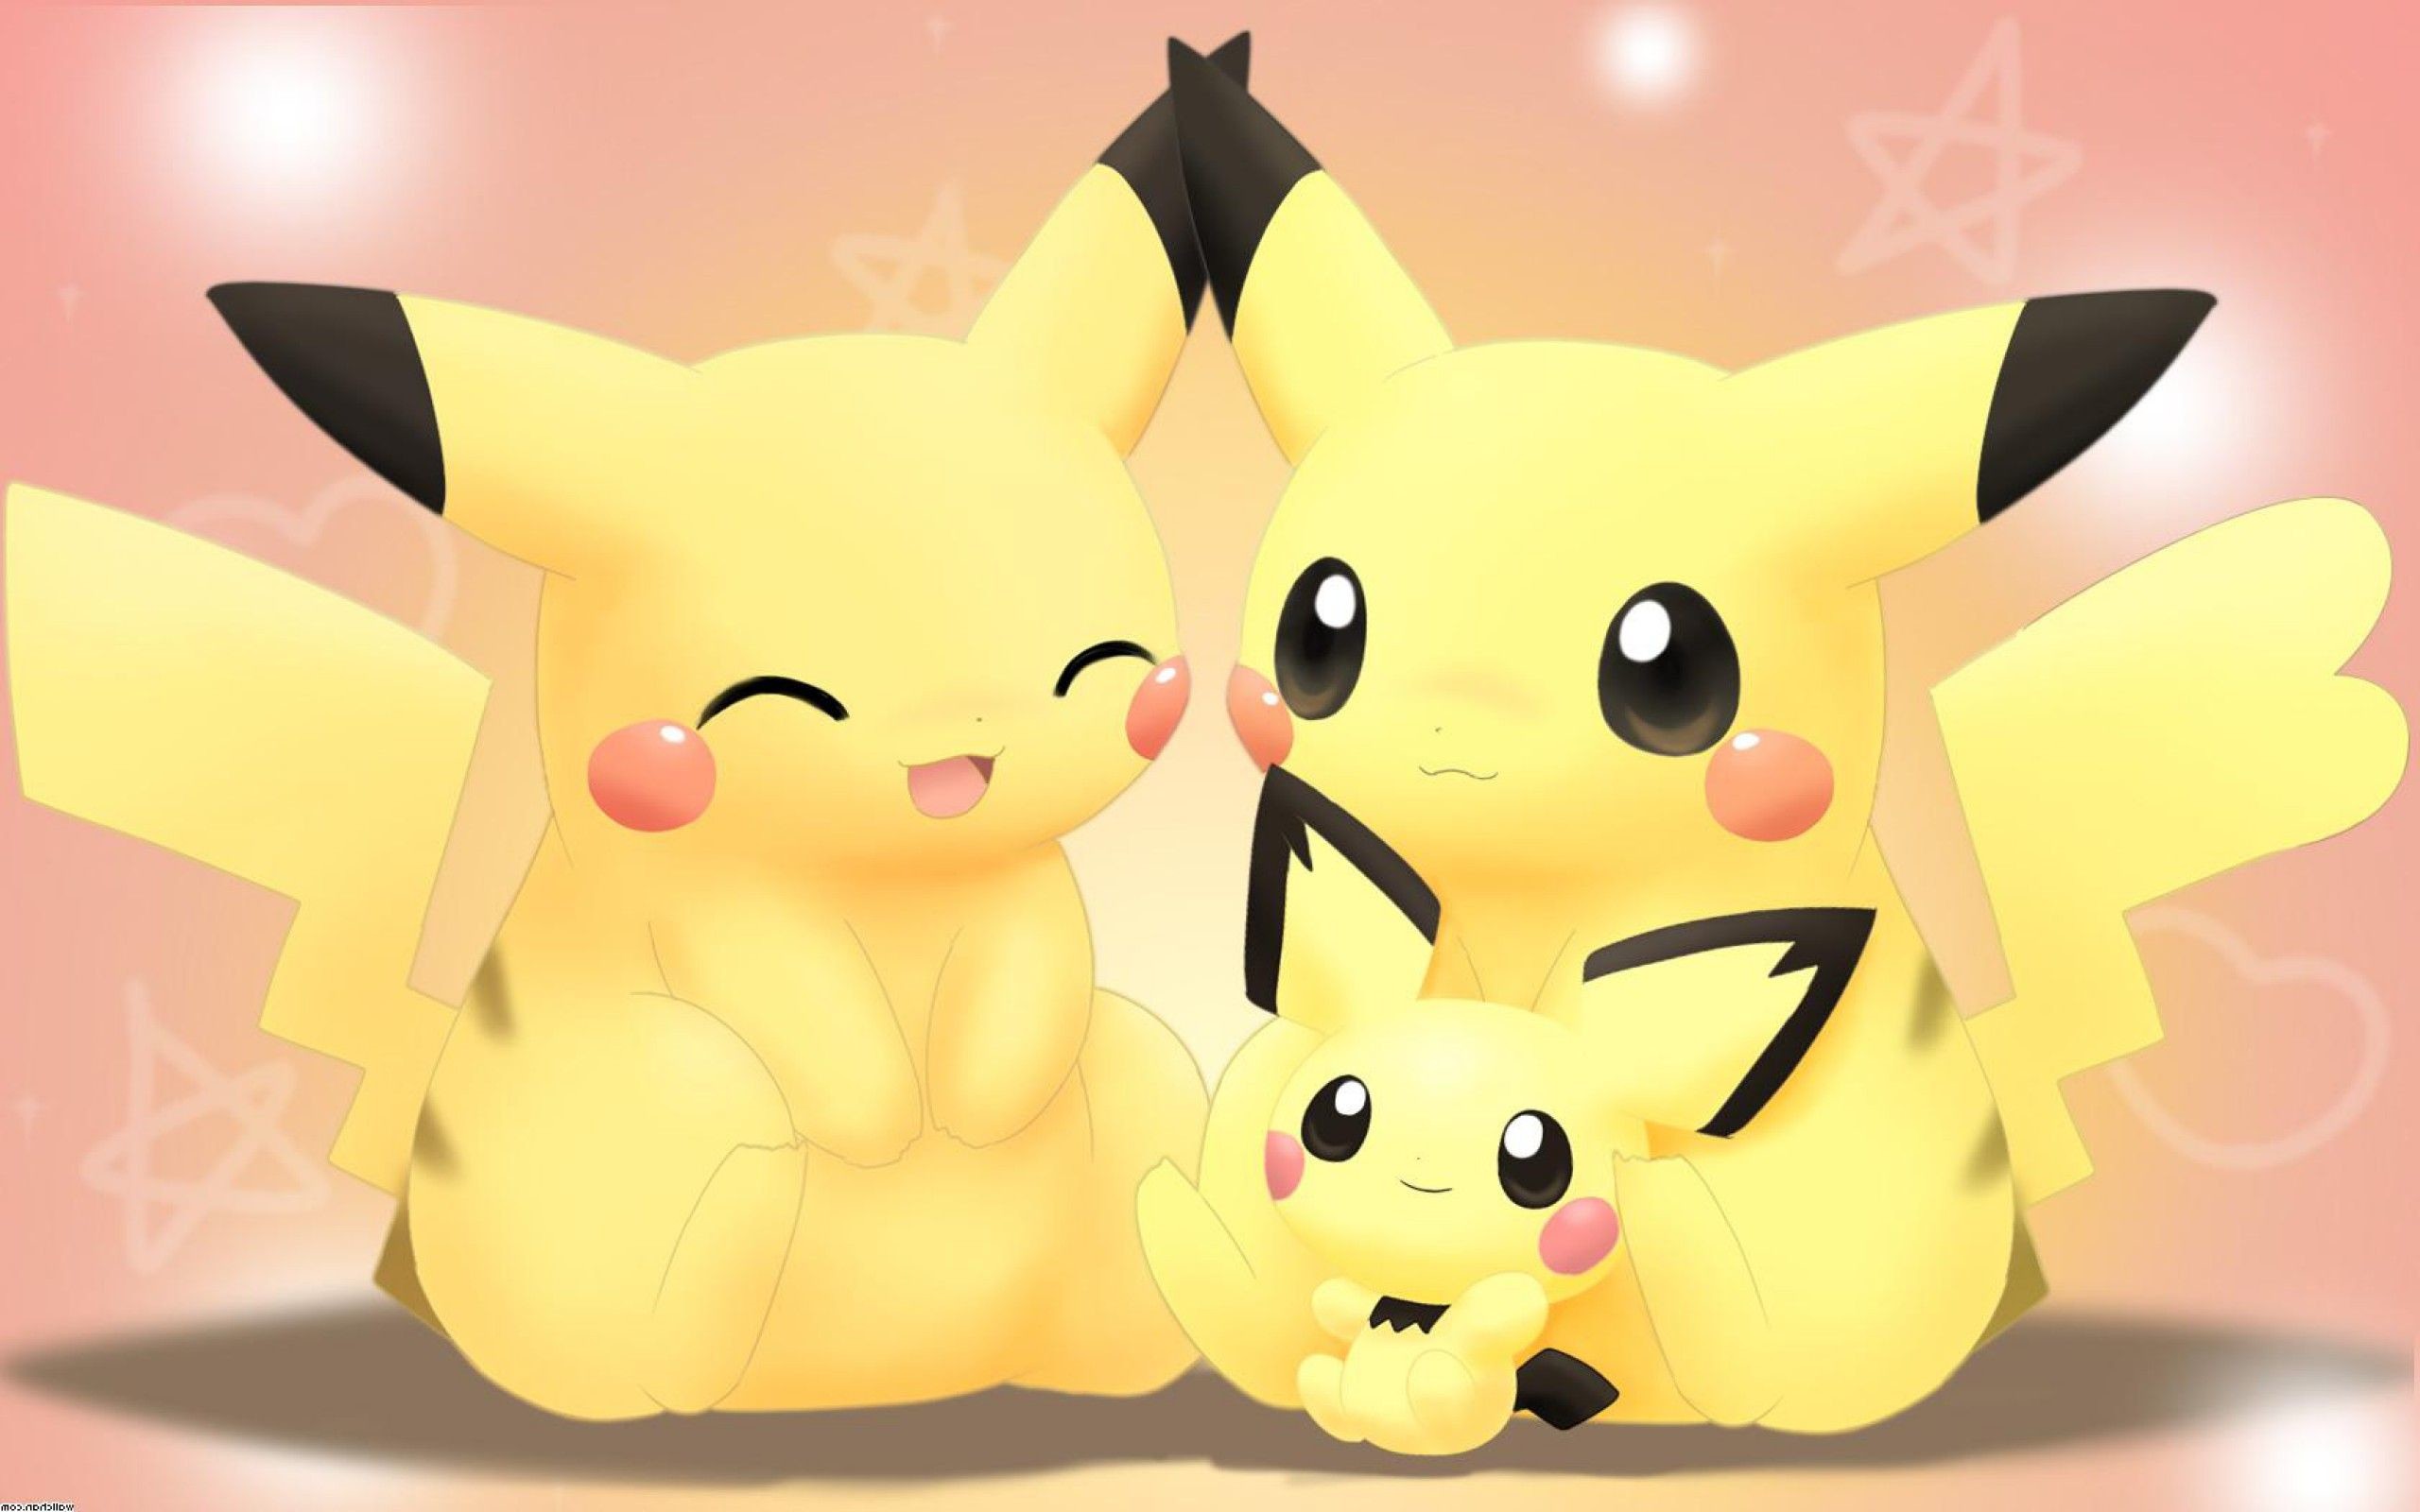 Cutest Pikachu Images Fully Hd 9 Pokemon Pikachu Wallpapers Full HD Wallpaper Search